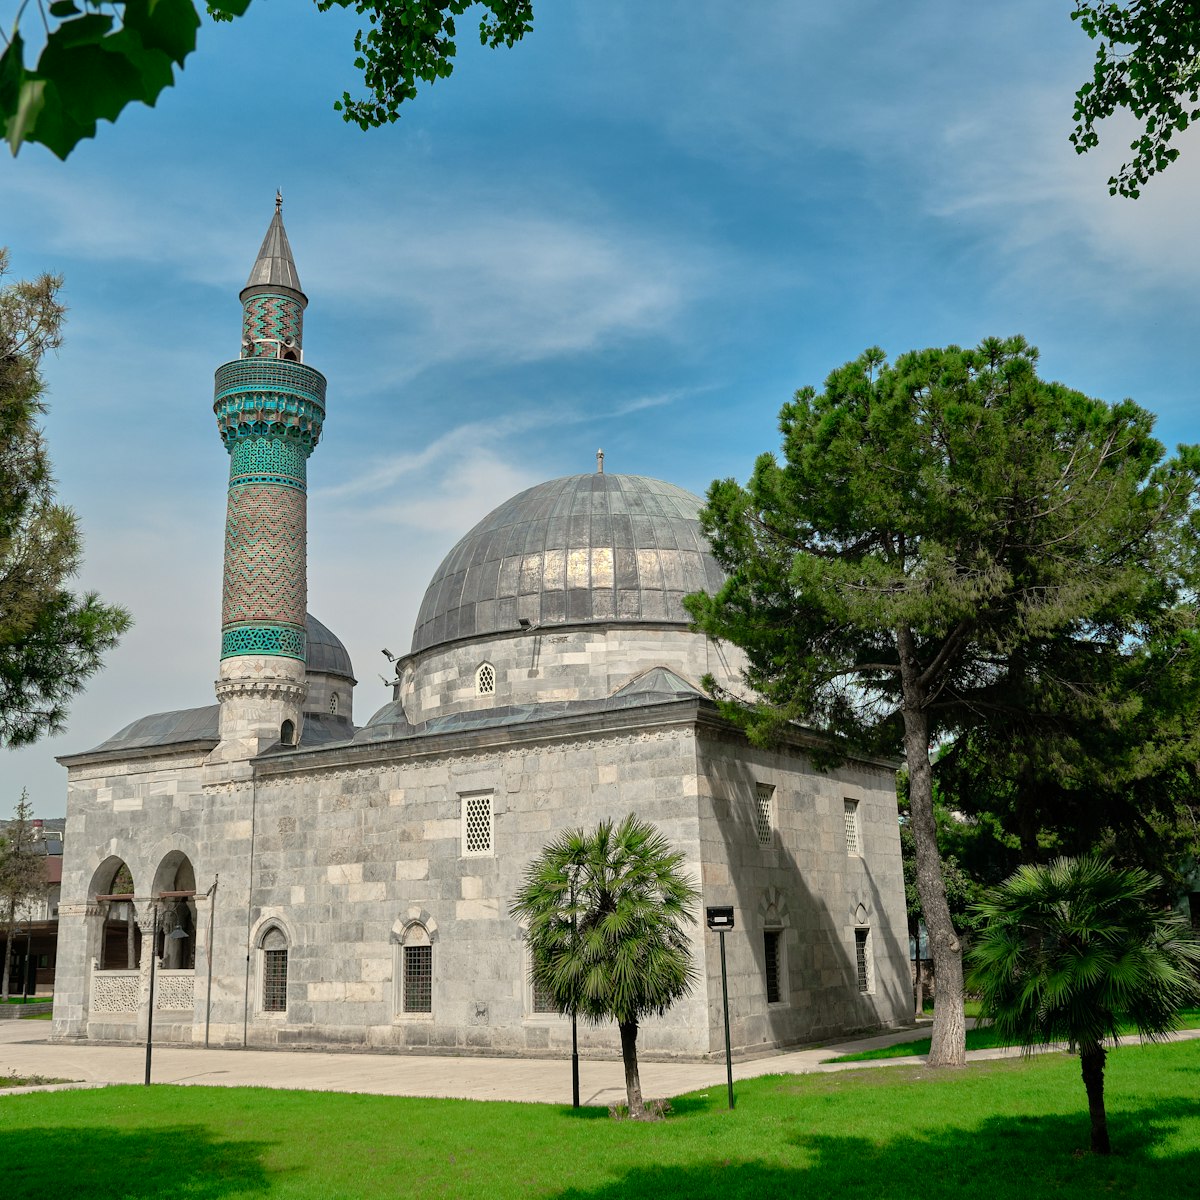 Green mosque (yesil camii) in Bursa, Turkey.